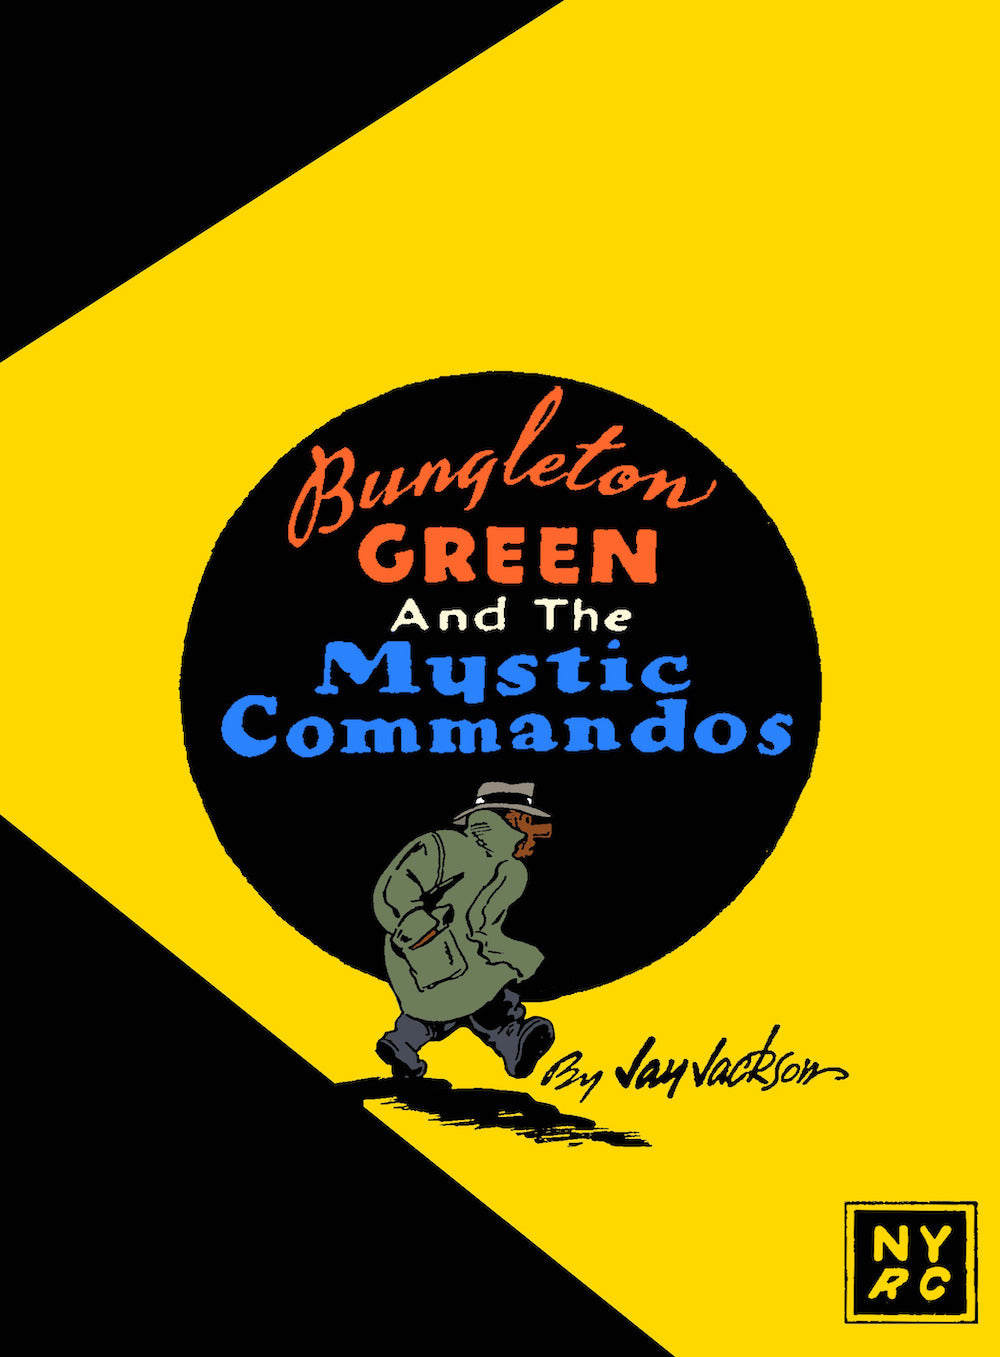 ‘Bungleton Green’ Nominated for an Eisner Award